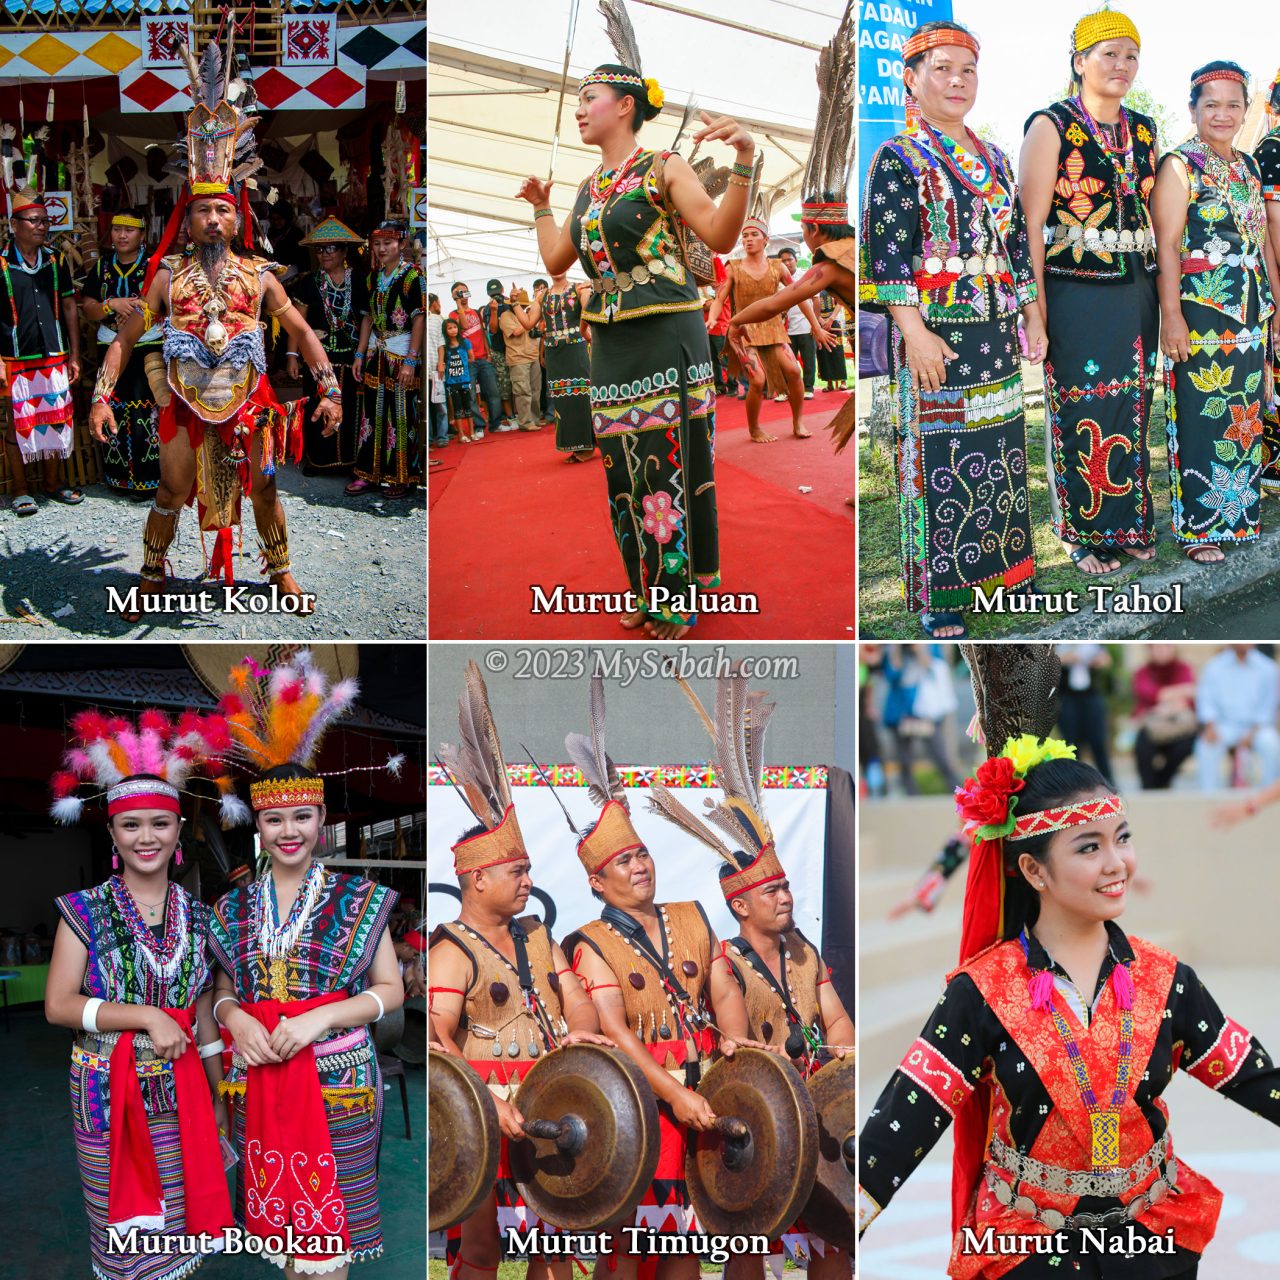 Sub-ethnics of Murut (Murut Kolor, Murut Paluan, Murut Tahol, Murut Bookan, Murut Timugon, Murut Nabai)